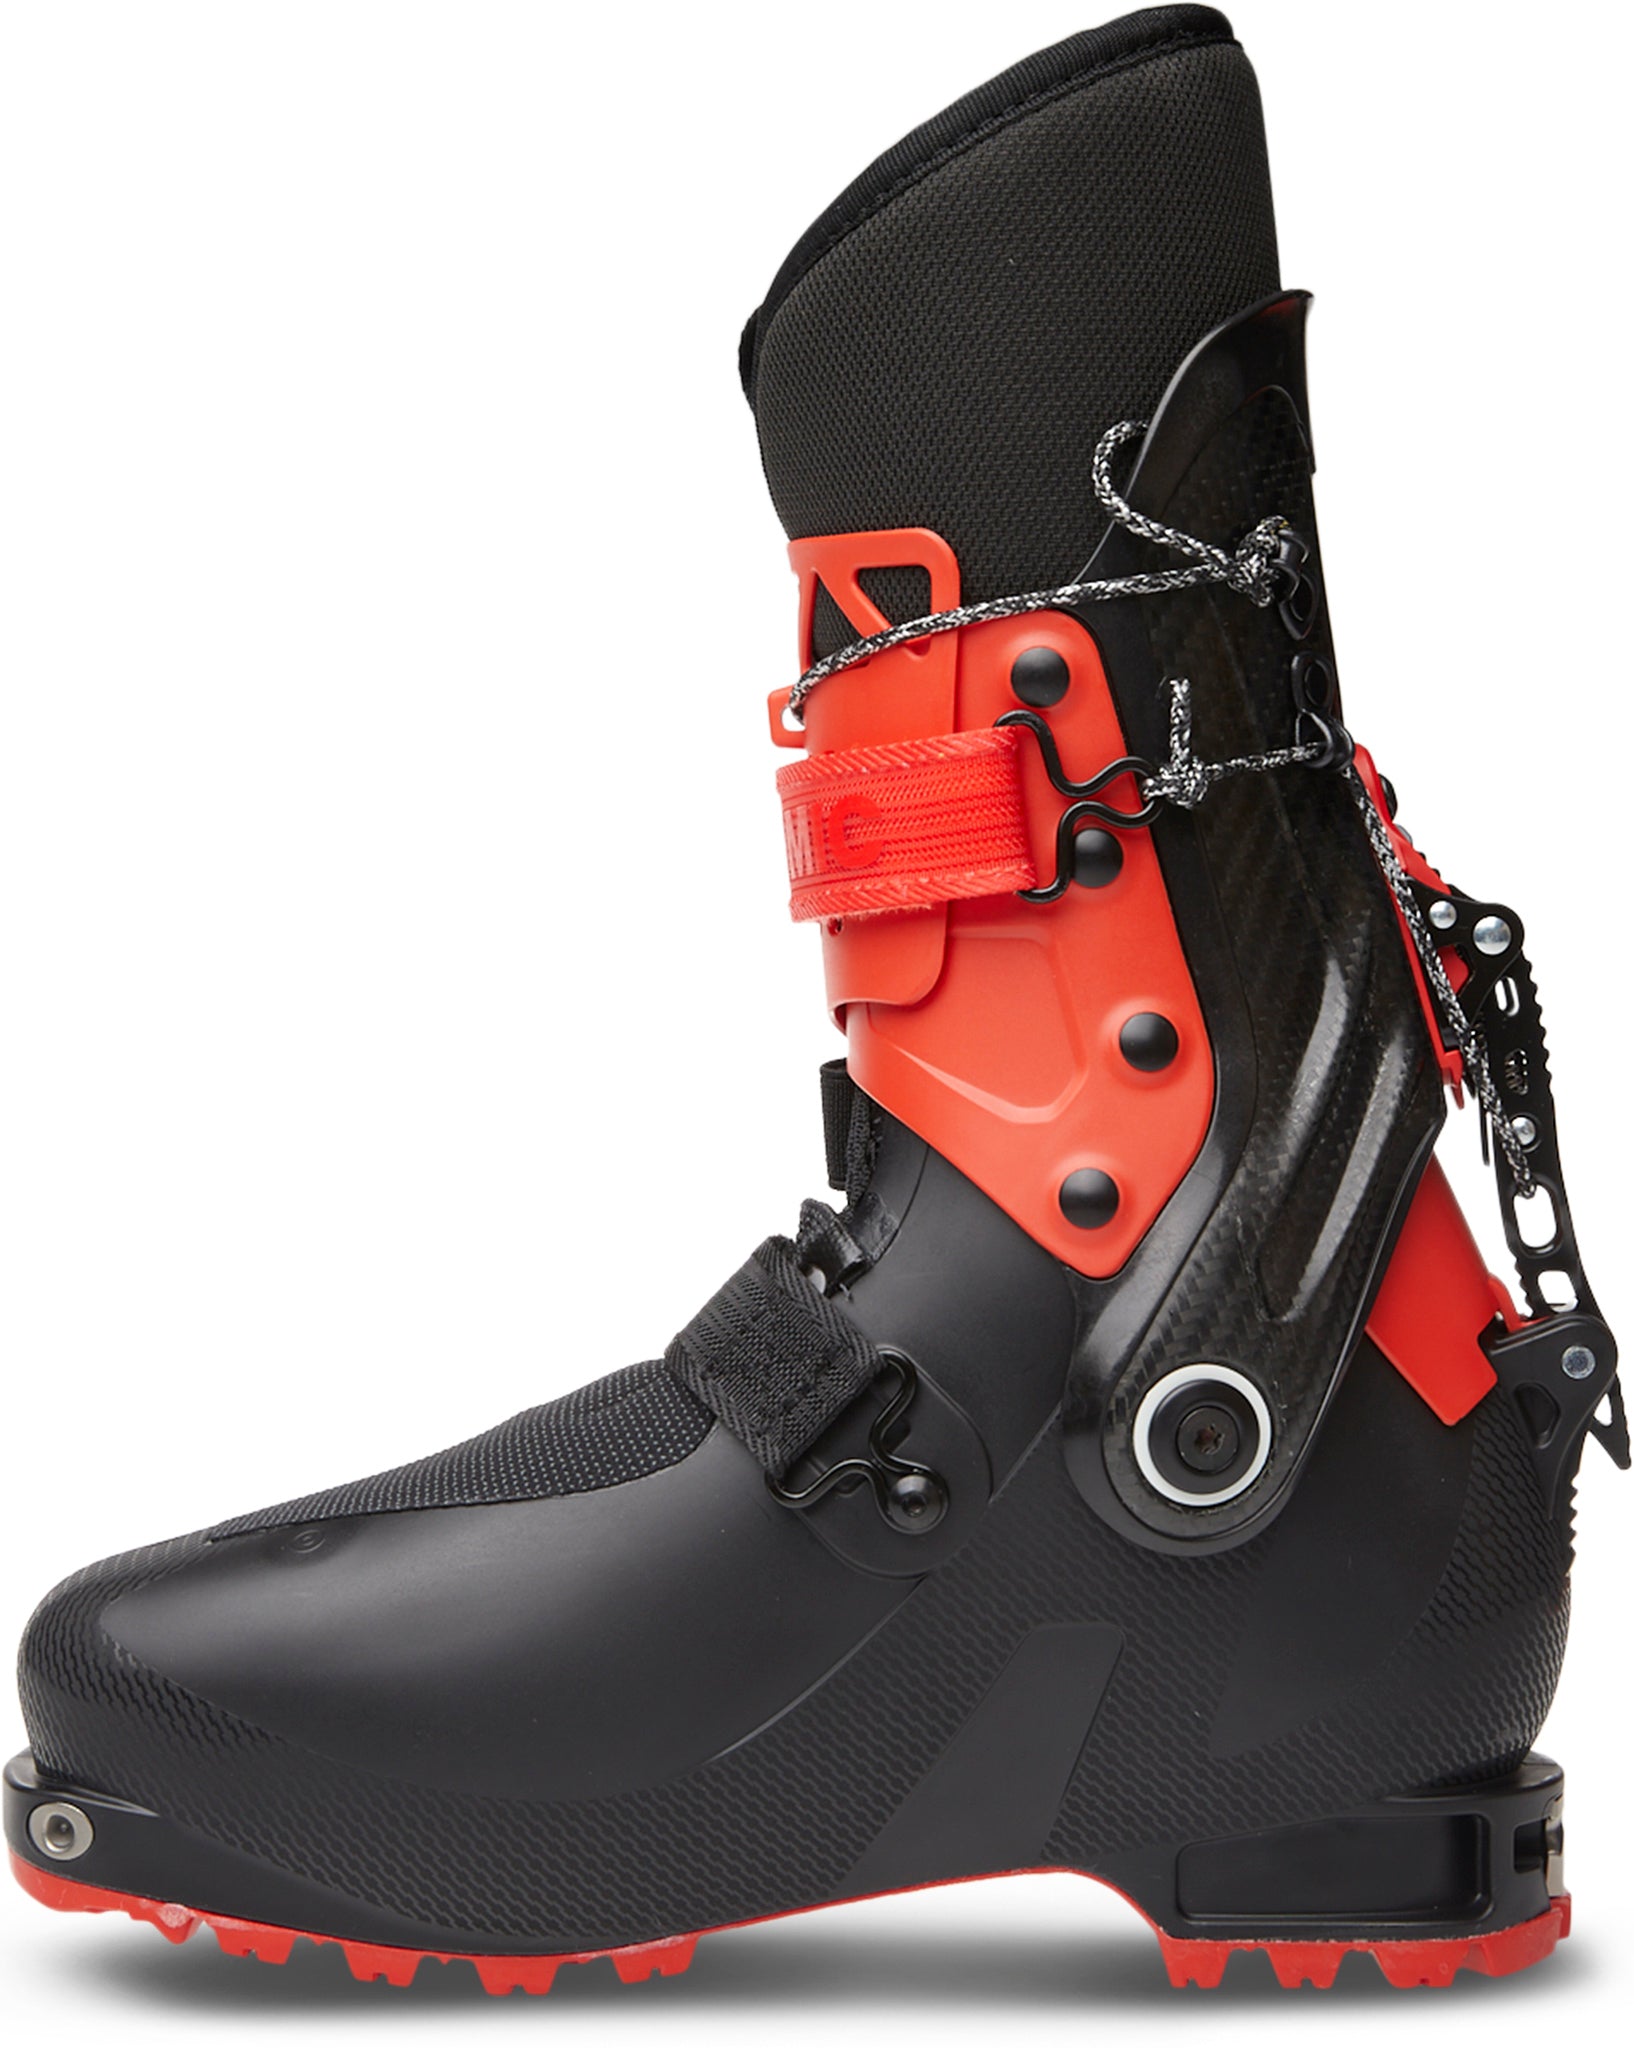 Atomic Backland Ultimate Ski Boots - Men's | Altitude Sports